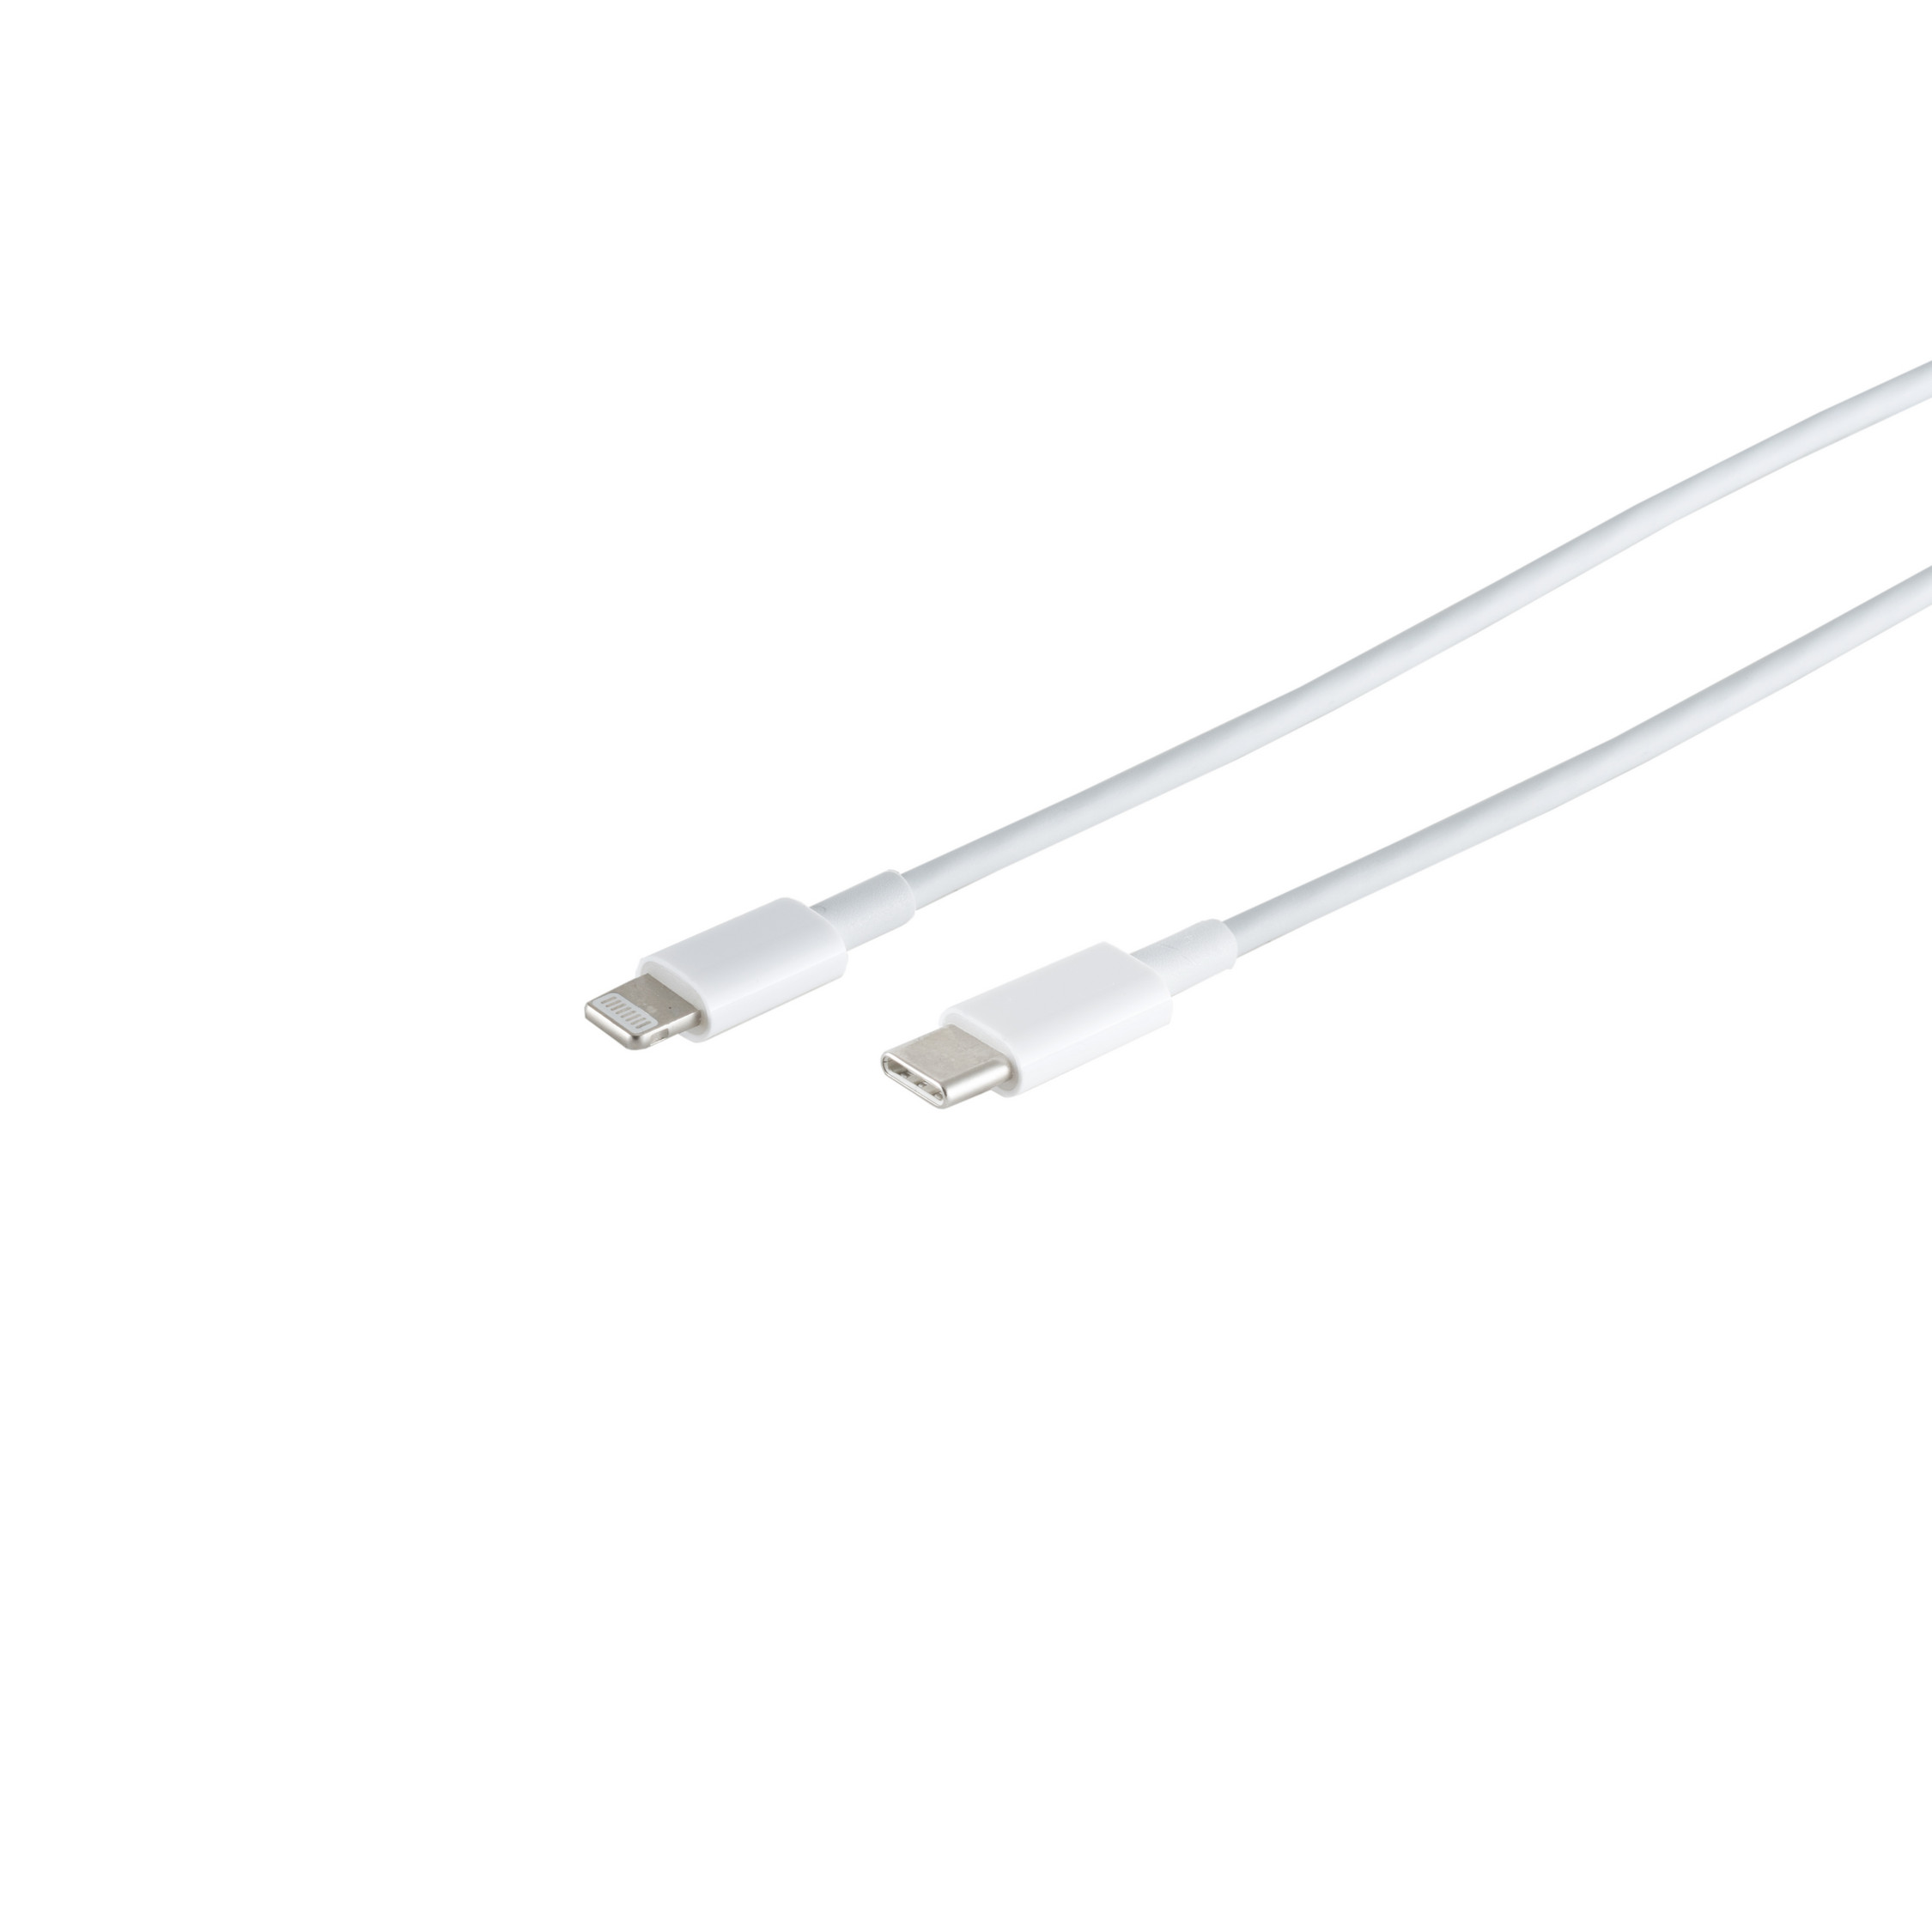 S/CONN MAXIMUM CONNECTIVITY USB Lade Kabel, 8-pin USB-C® Kabel USB Stecker, Stecker auf